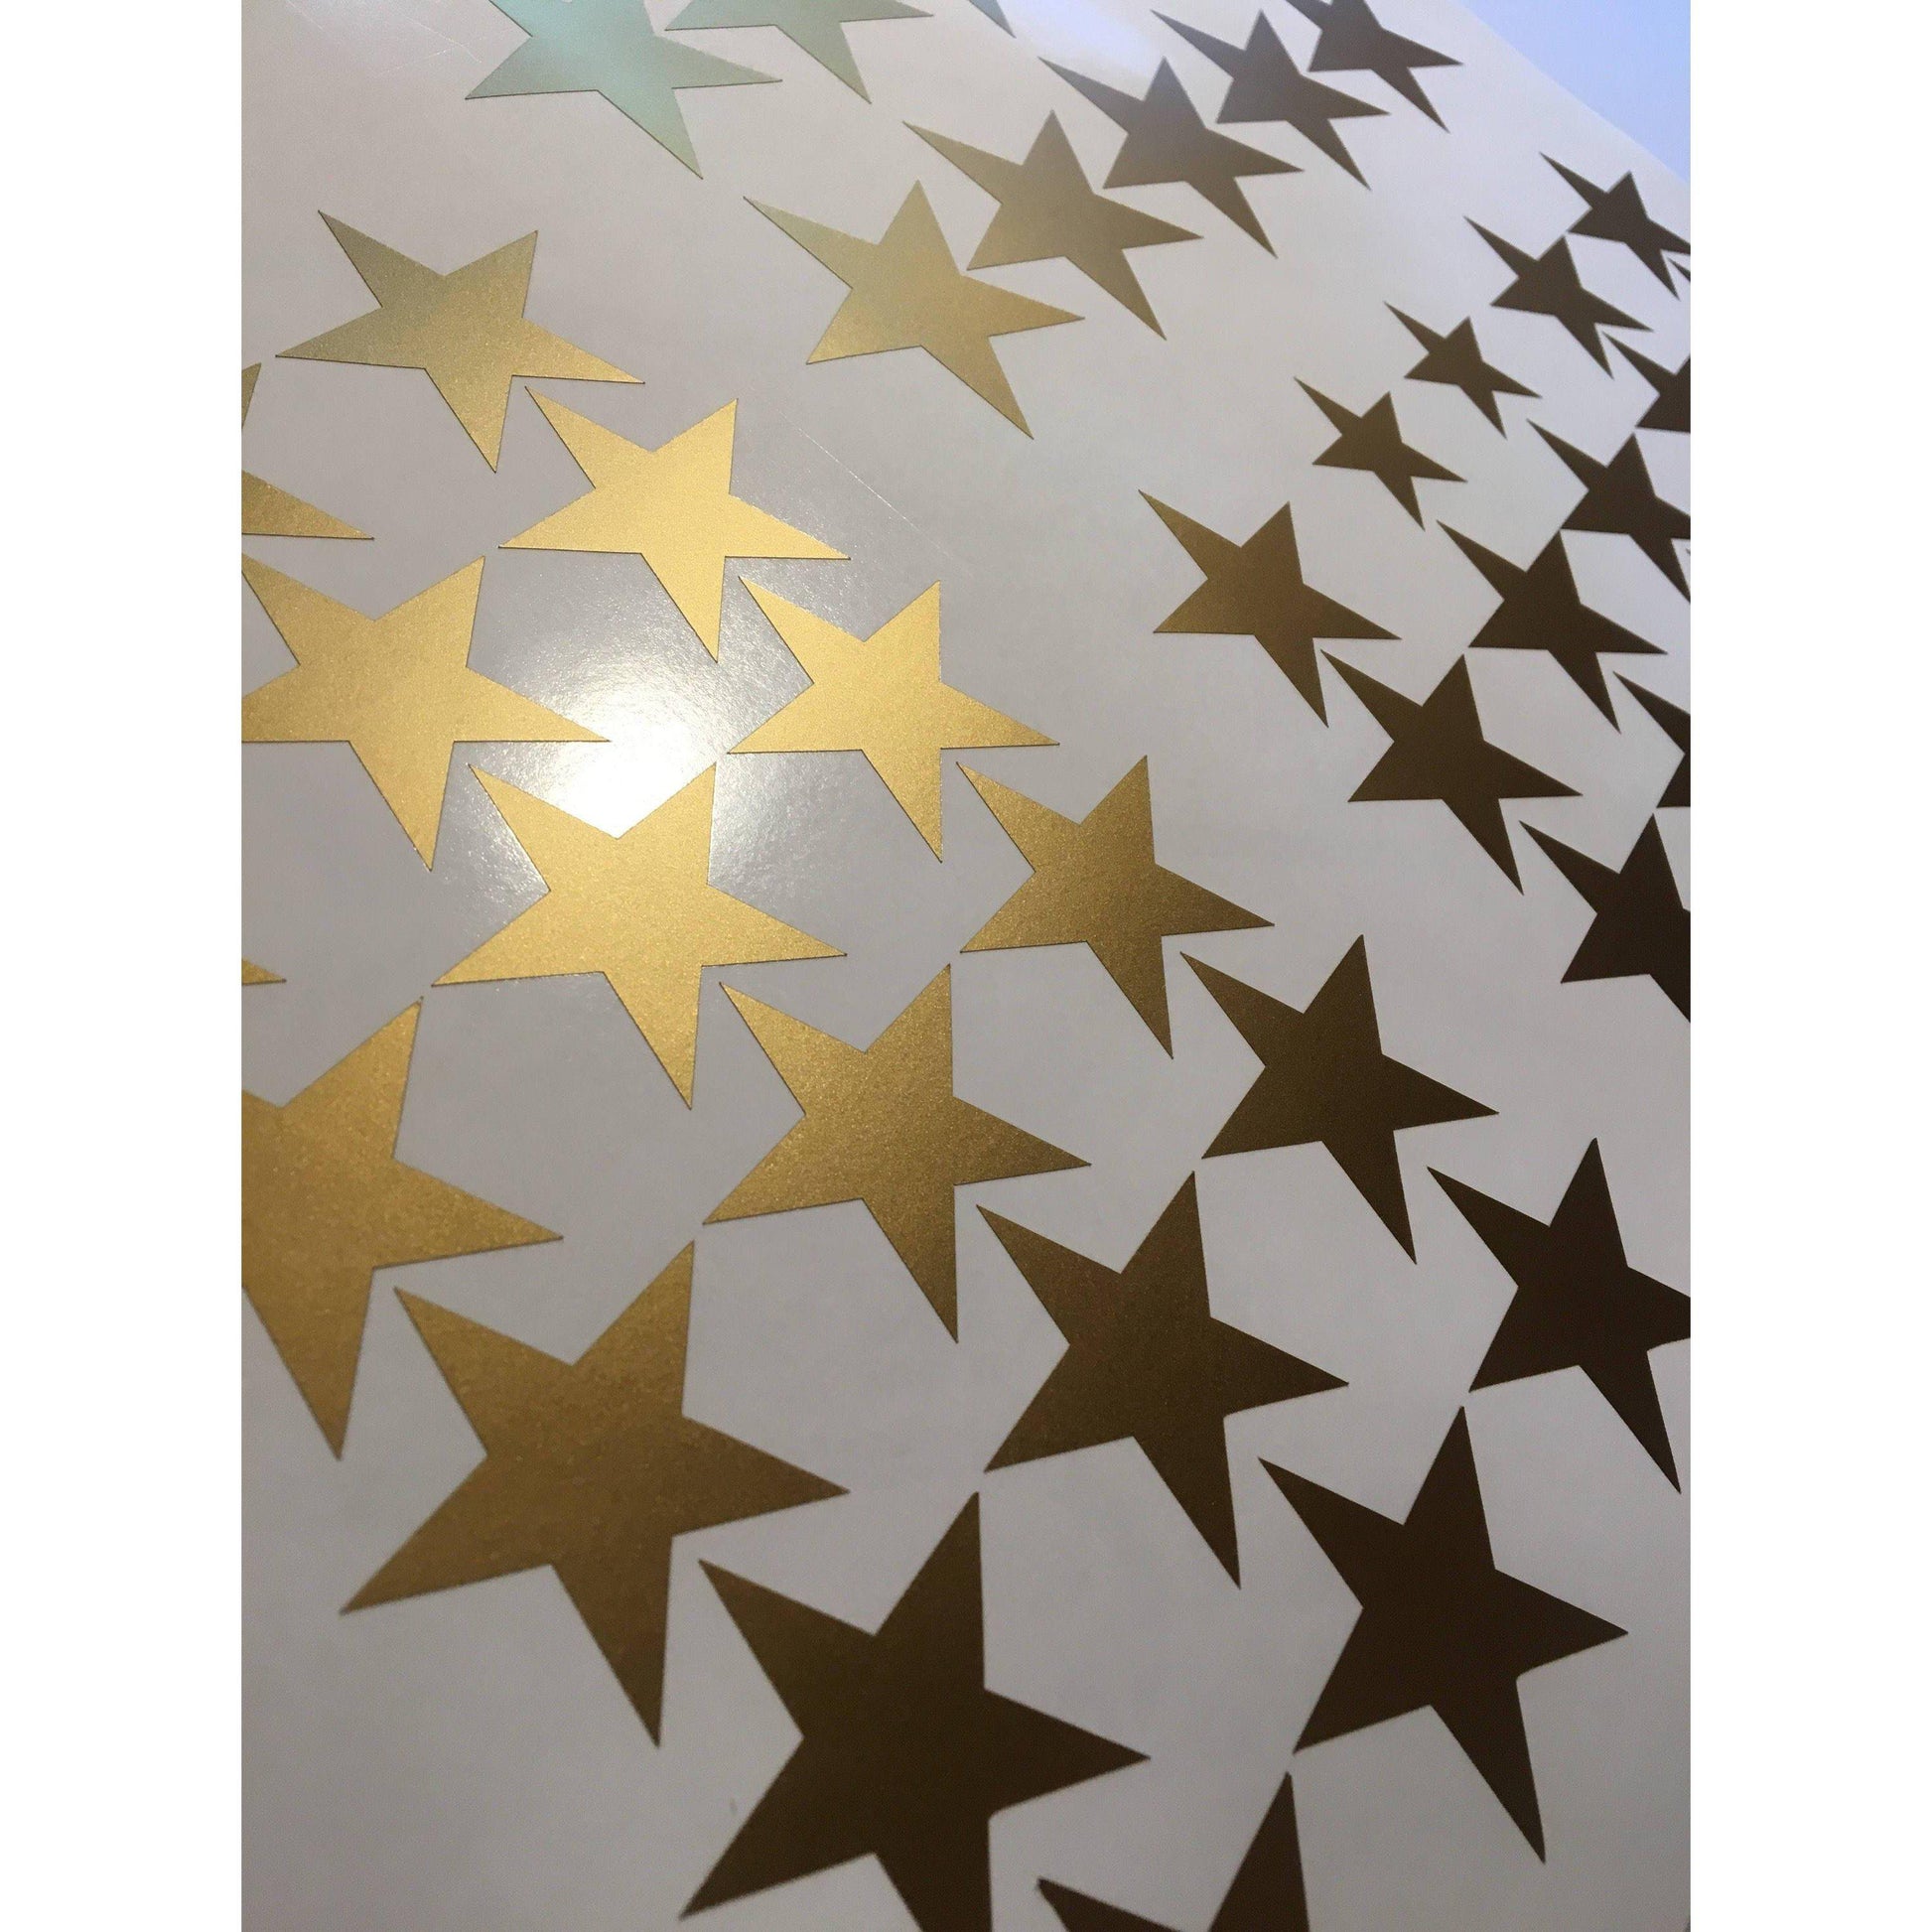 120 Gold Star Wall Stickers Gold Wall Decals Star Wall Decals Star Decals Baby Room Wall Art Gold Confetti Star Confetti Twinkle Stars Kids